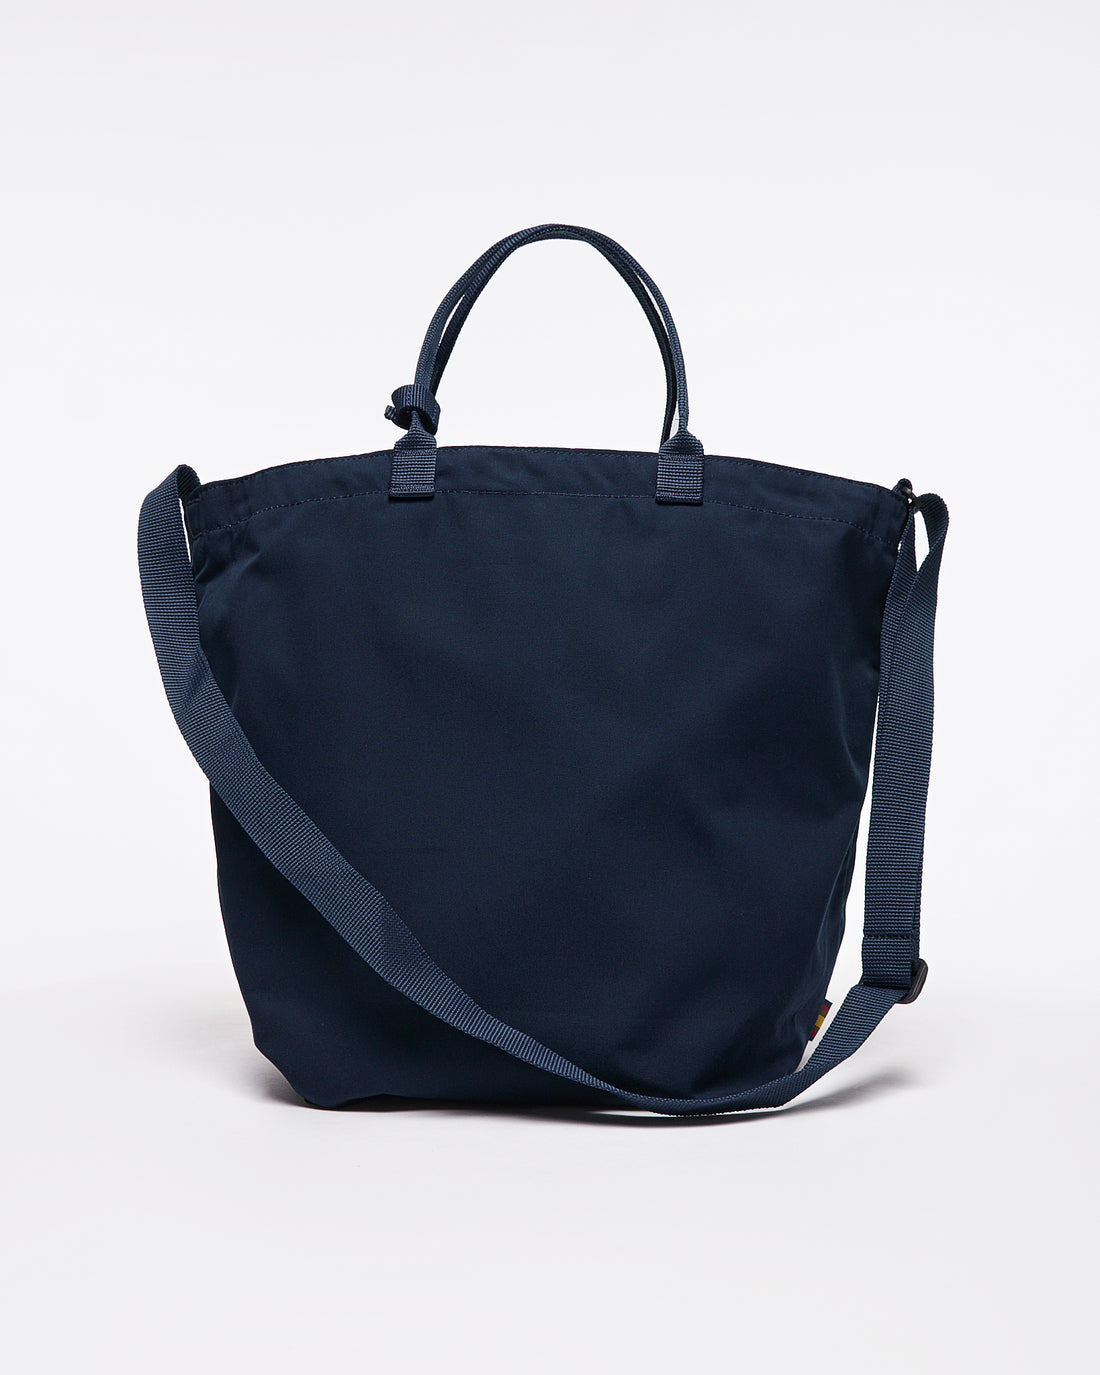 FJA Lady Blue Tote Bag 44.90